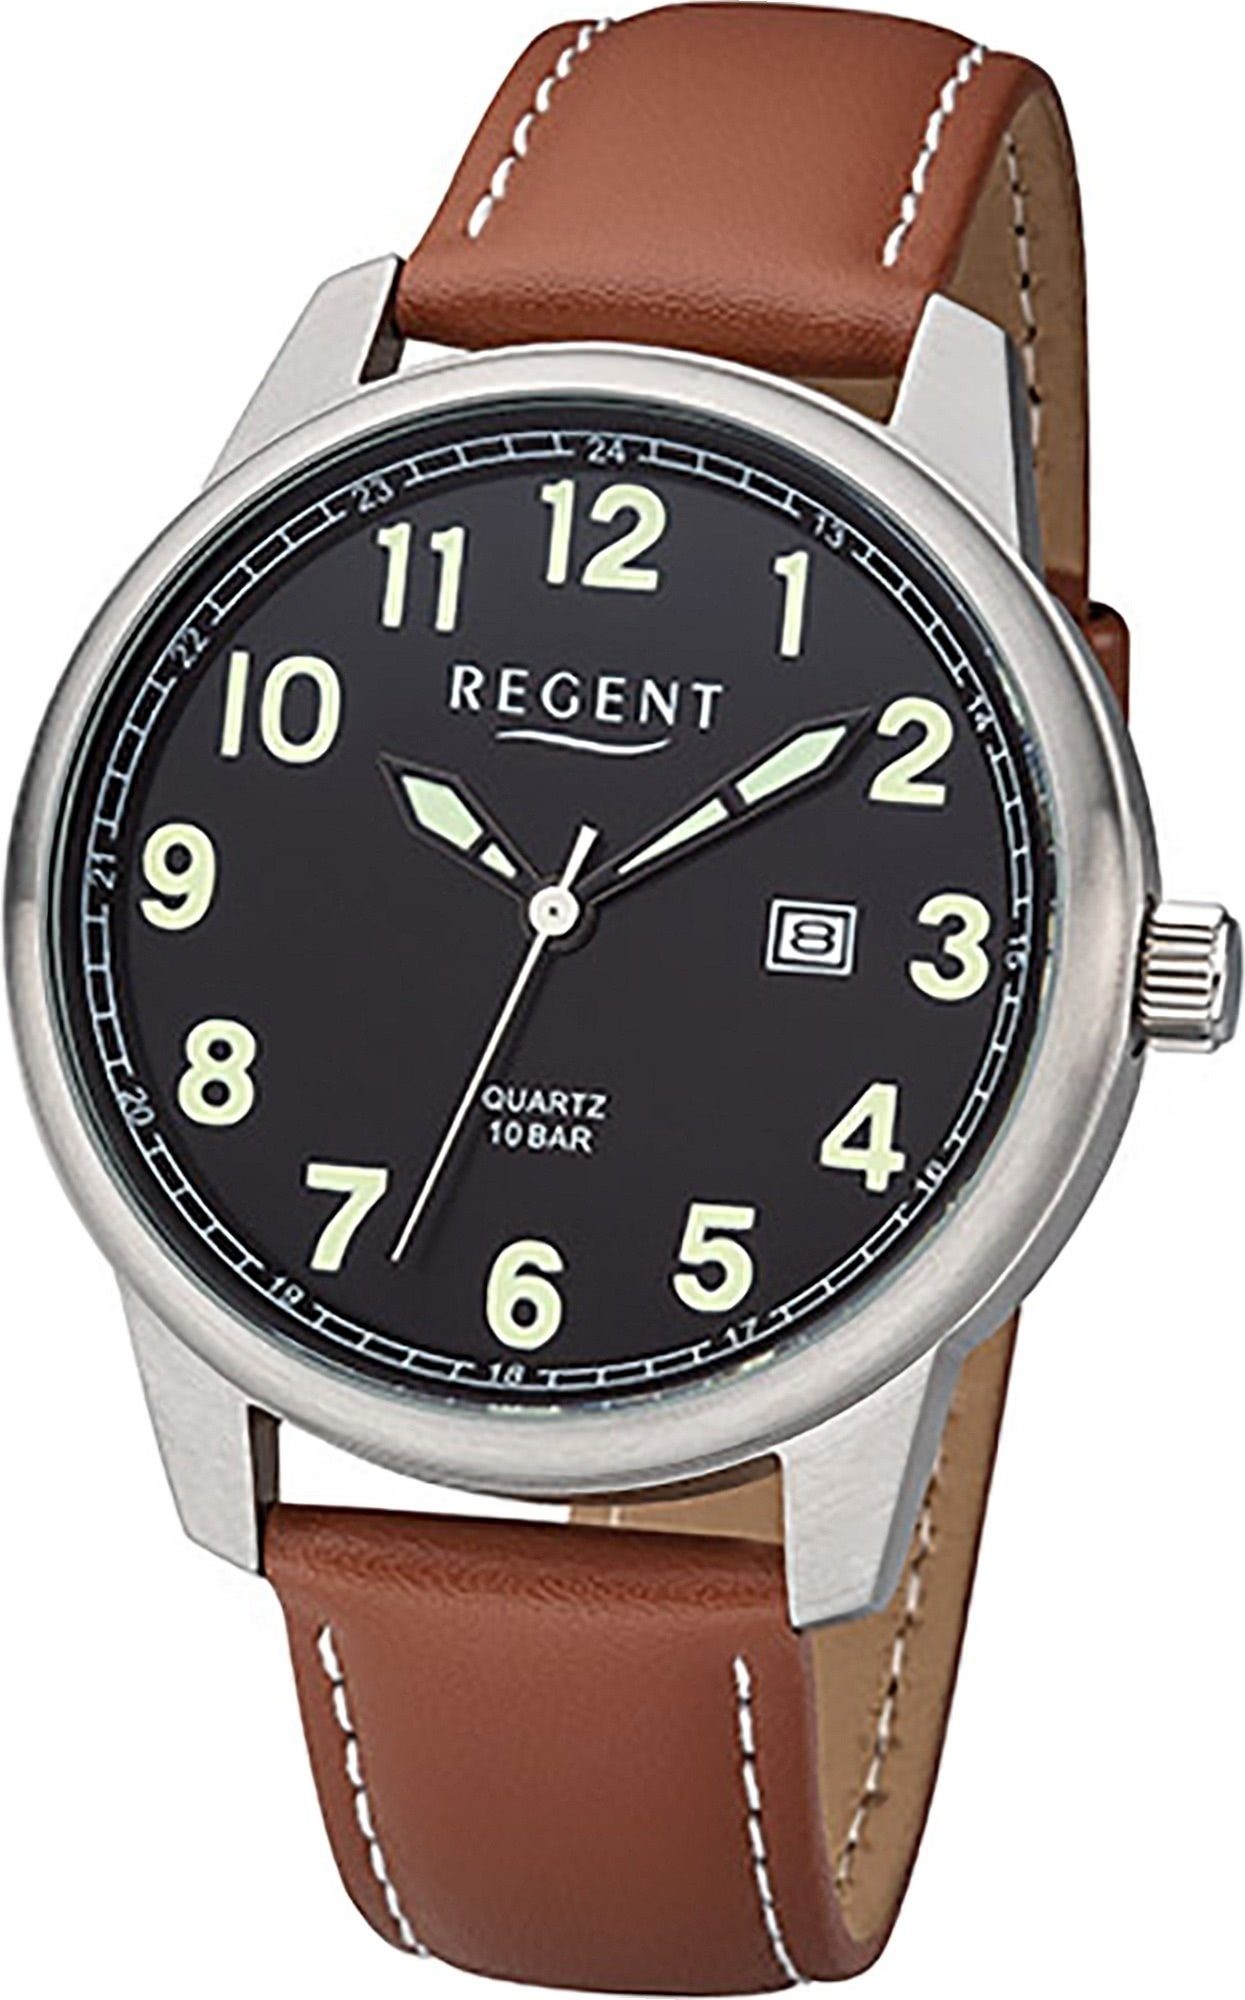 Regent Quarzuhr Regent Leder Herren Uhr F-1239 Analog, Herrenuhr Lederarmband braun, rundes Gehäuse, groß (ca. 41mm) | Quarzuhren